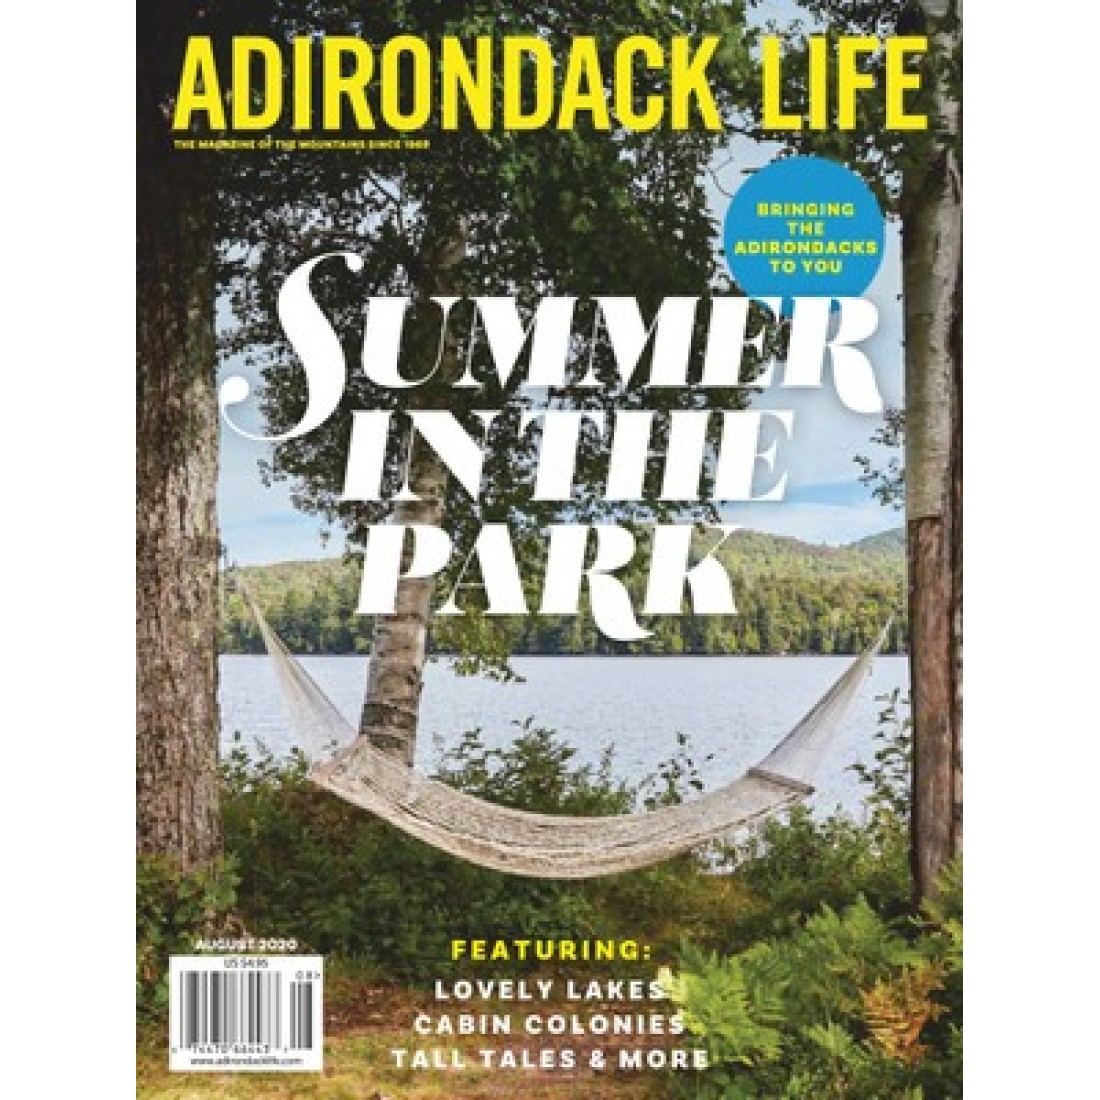 Adirondack Life Magazine Subscriber Services